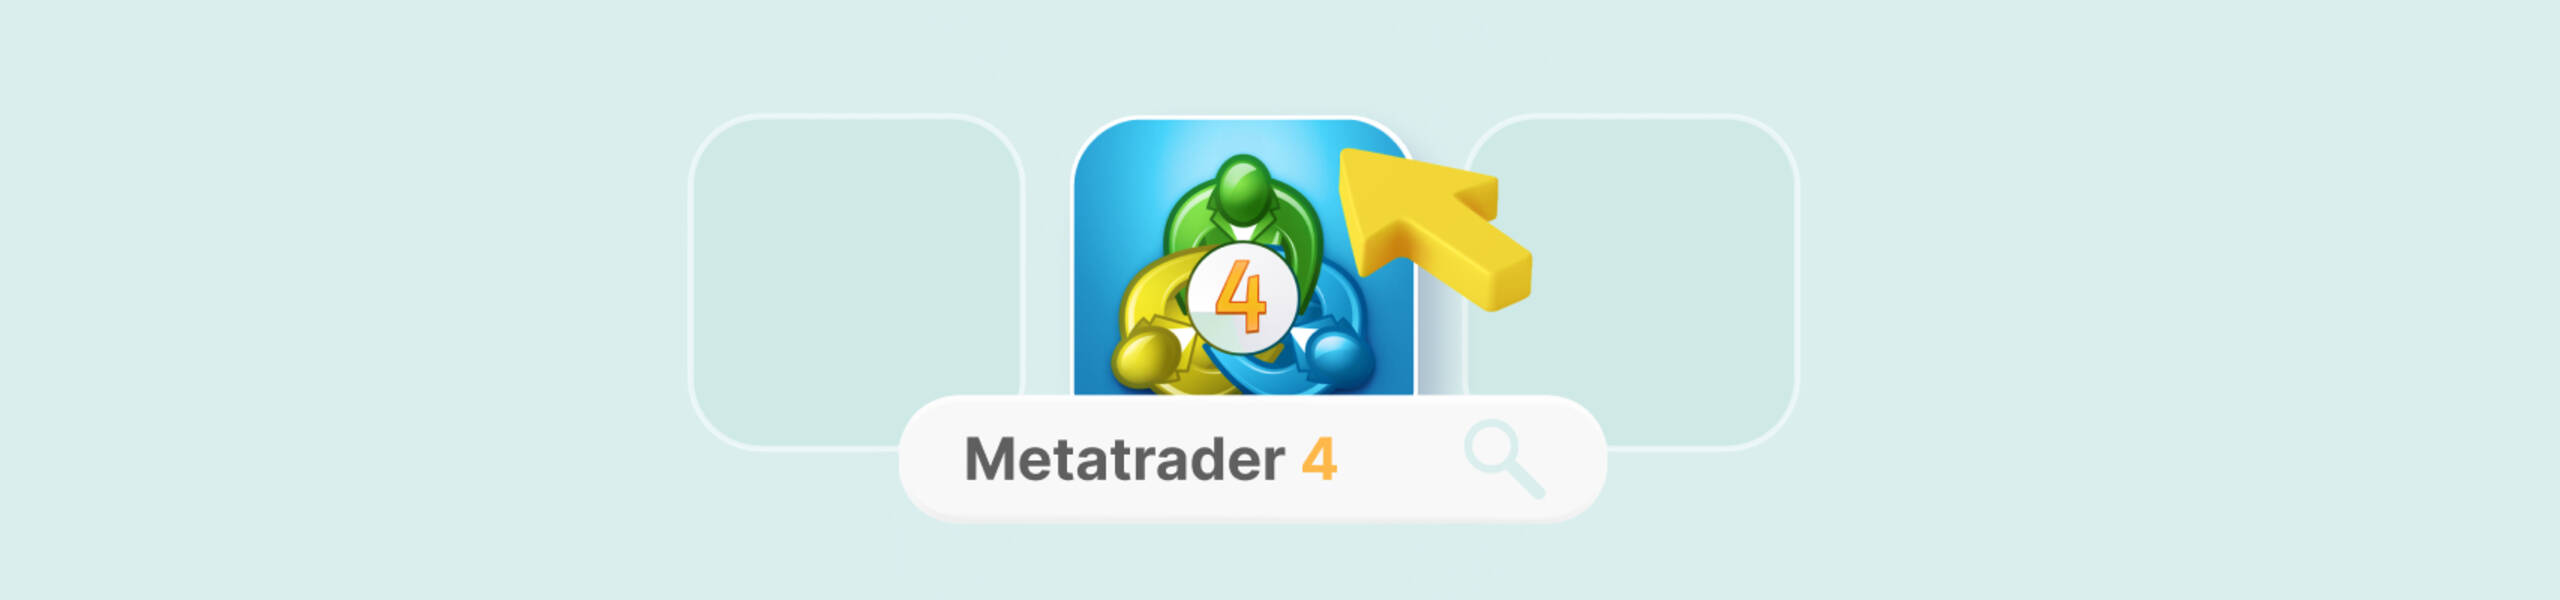 Cara Menggunakan MetaTrader 4: Panduan untuk Pemula